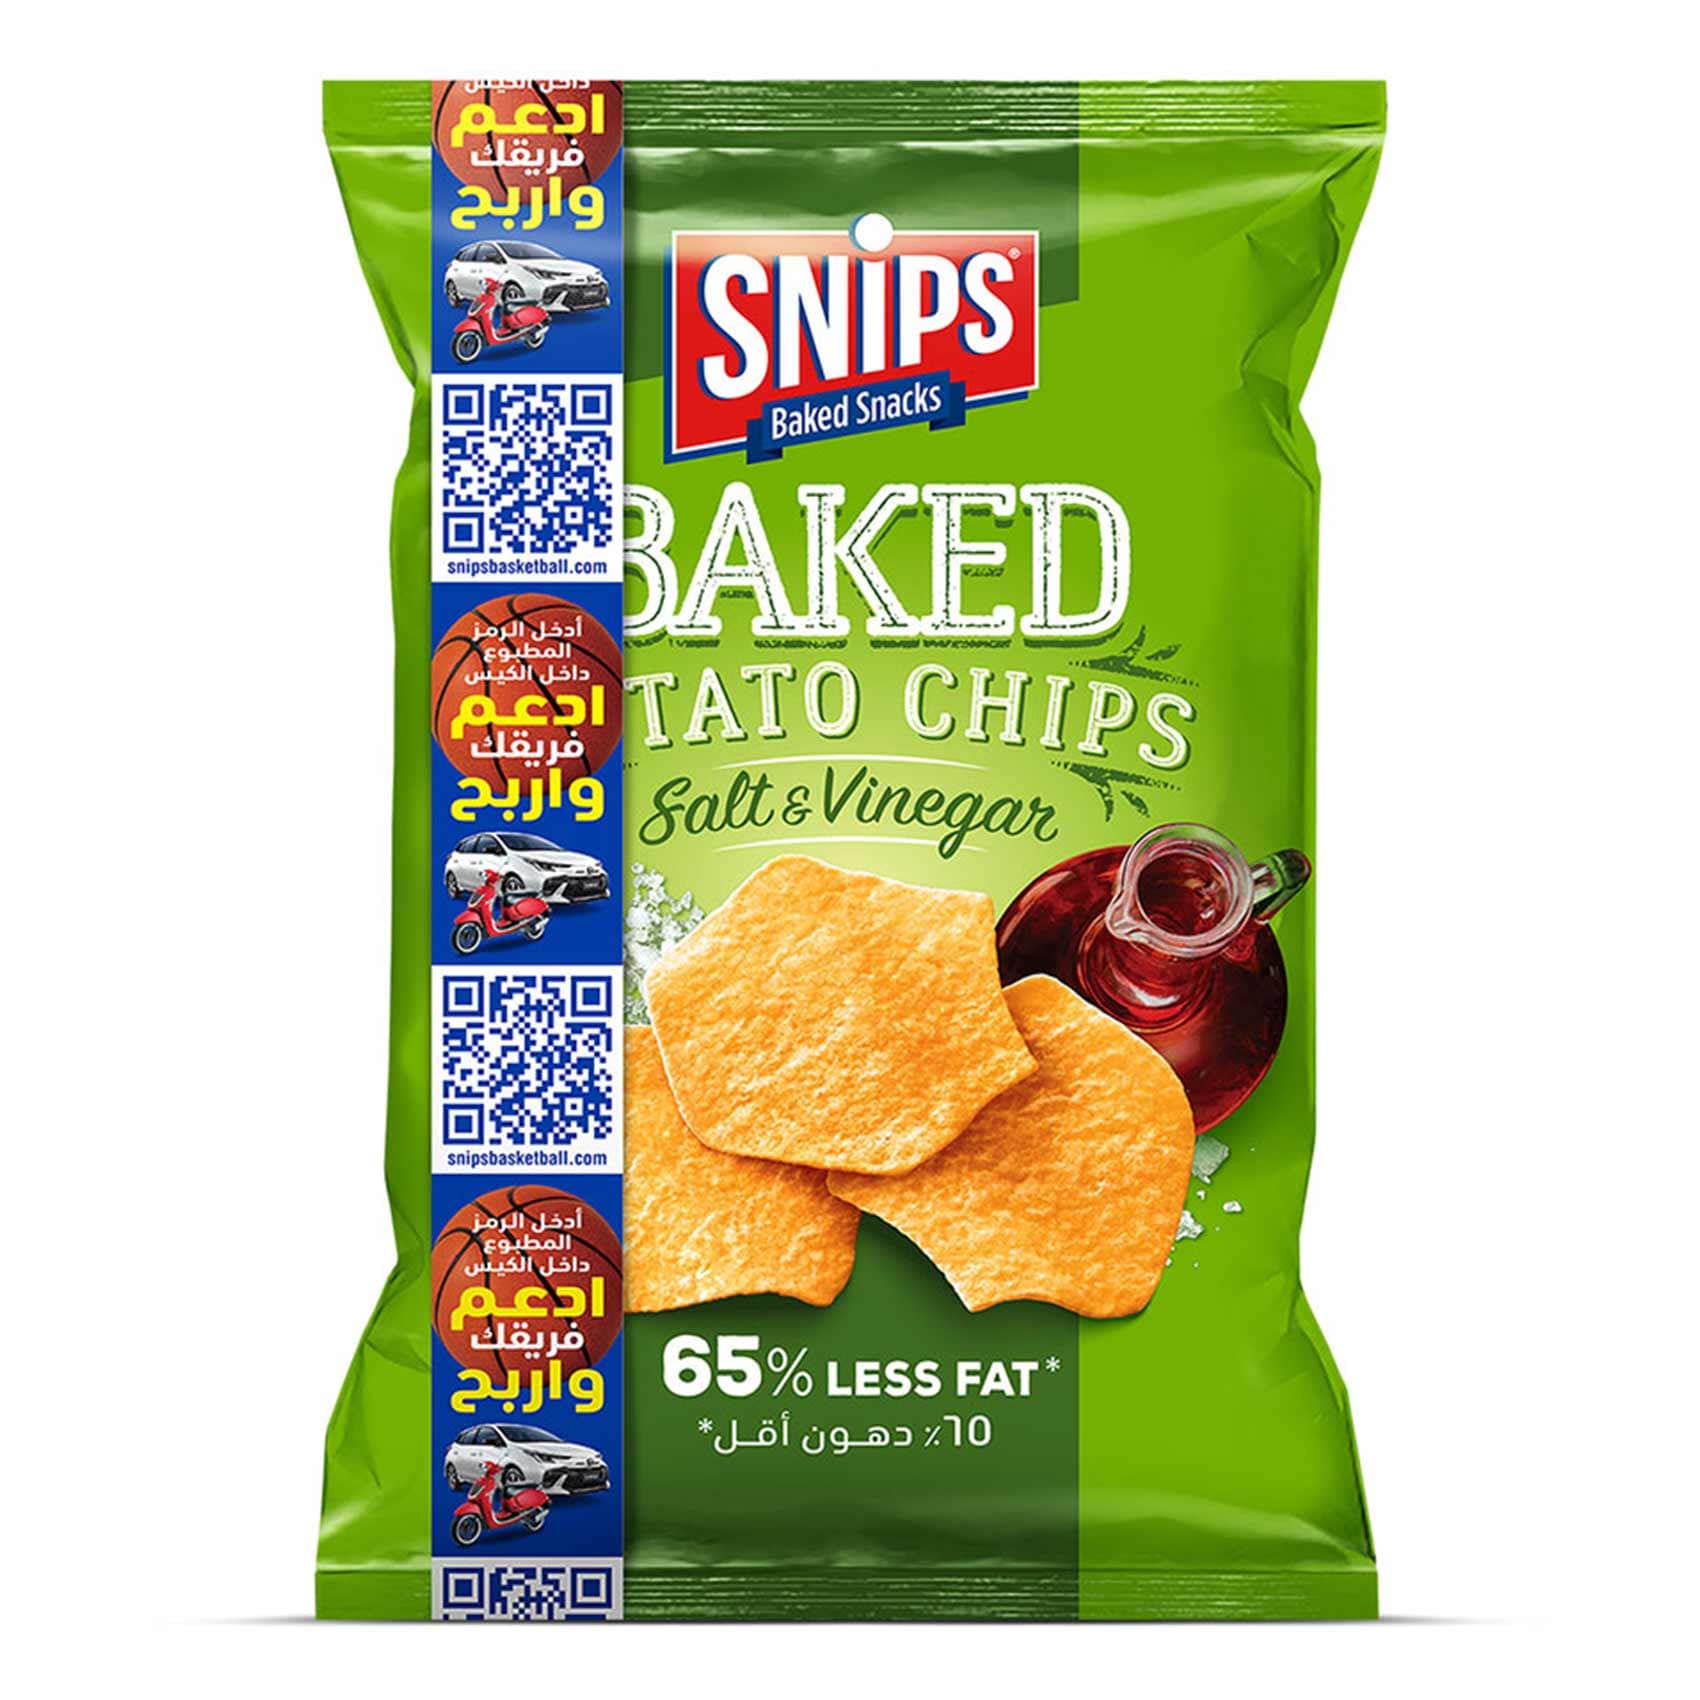 Delicious Snips Salt & Vinegar Baked Chips